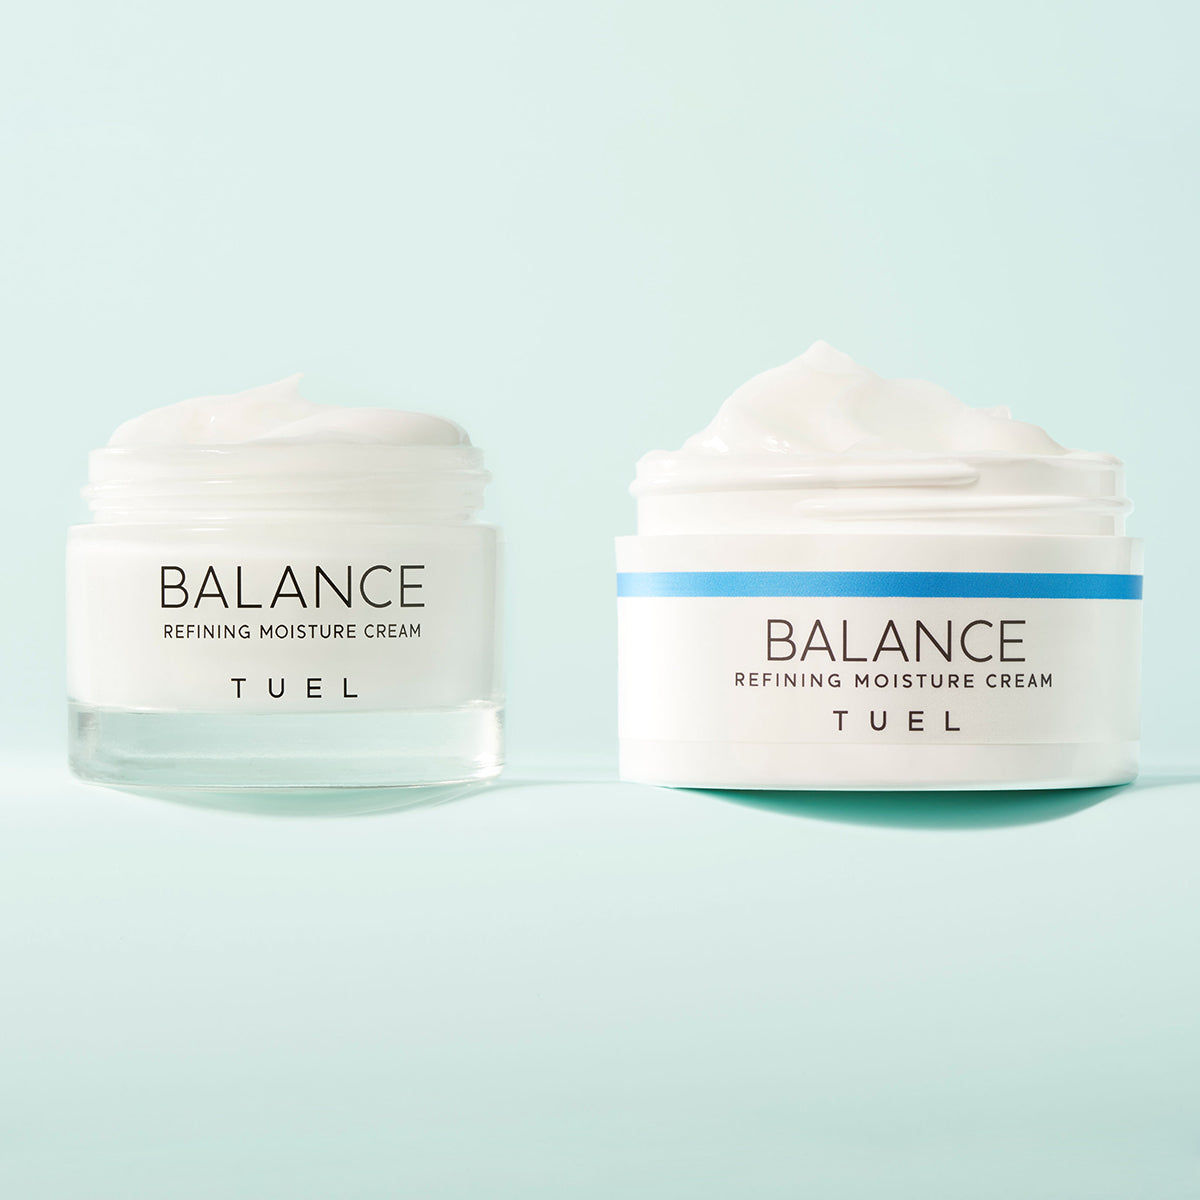 Balance Refining Moisture Cream